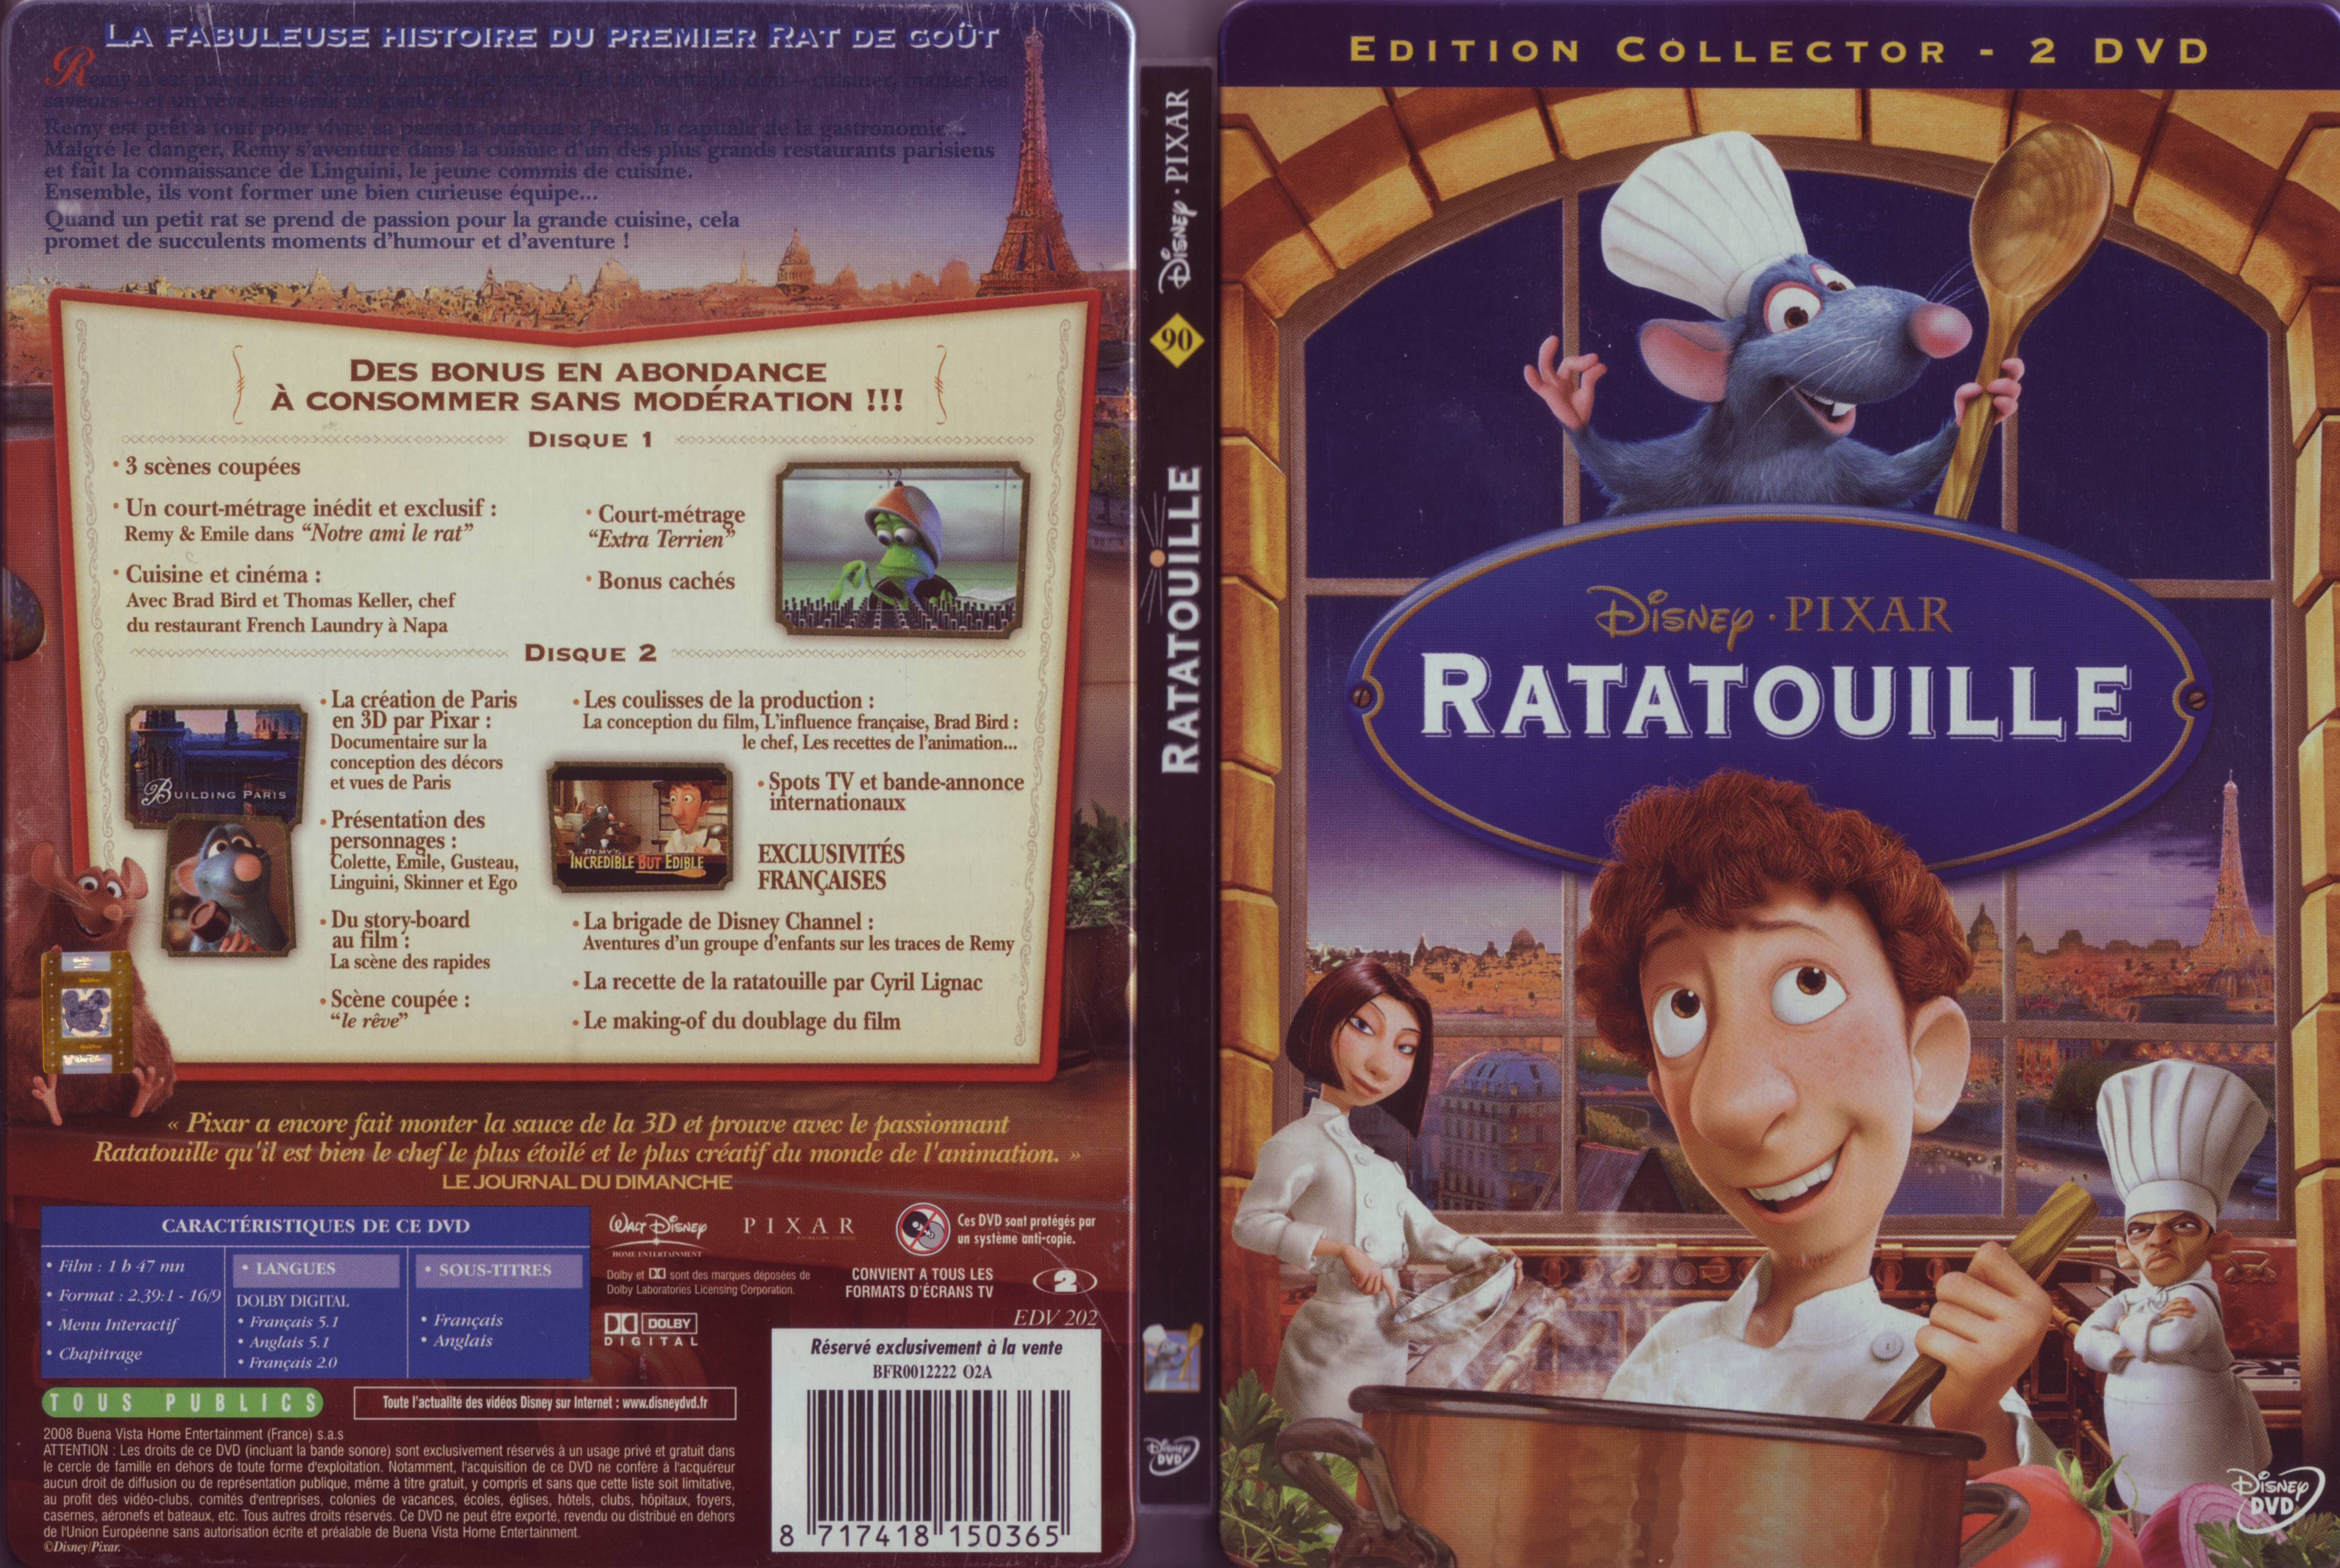 Jaquette DVD Ratatouille v2